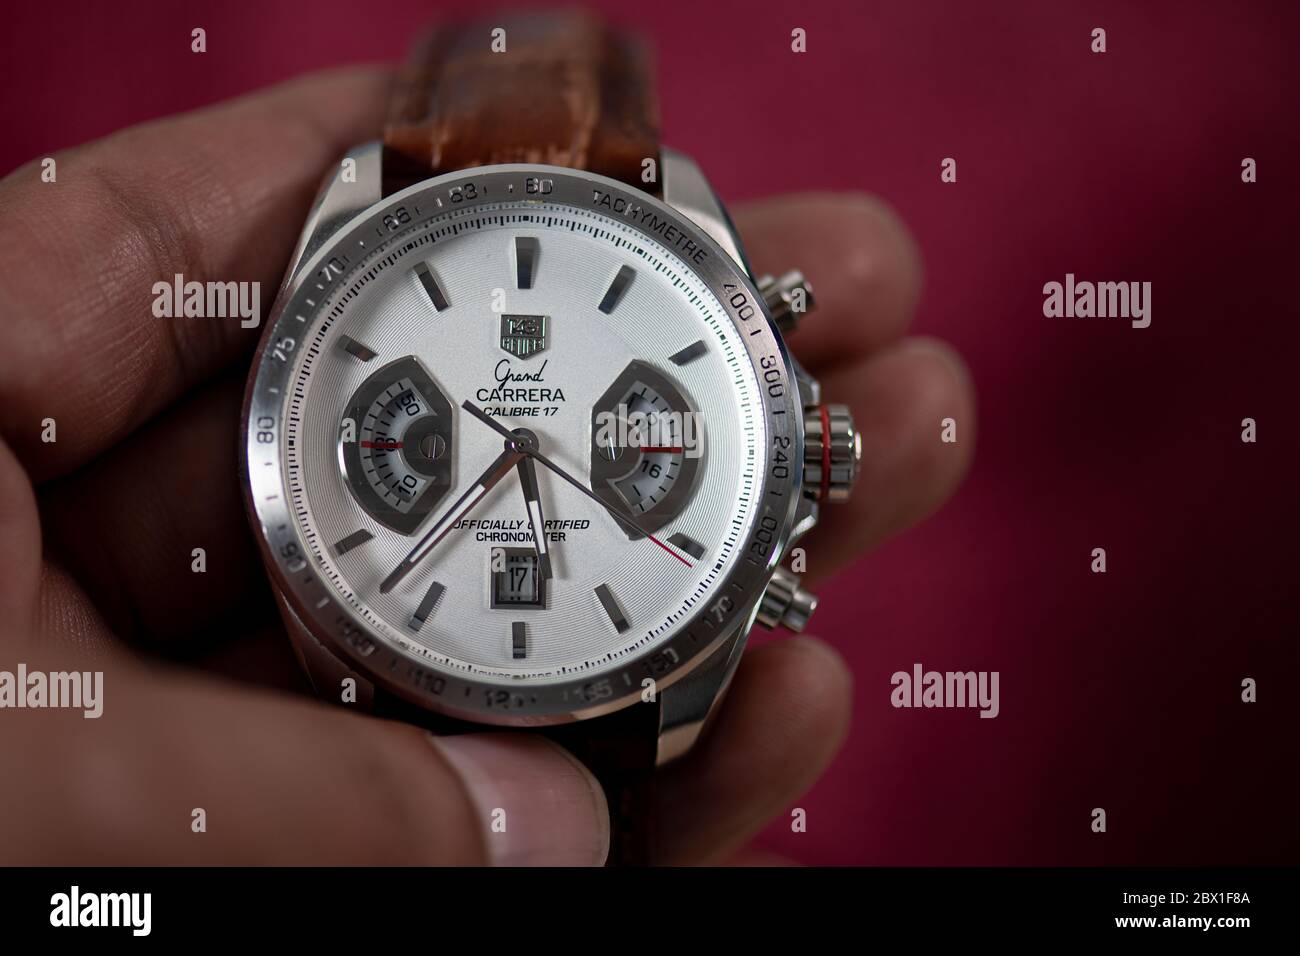 Tag Heuer Grand Carrera Calibre 17 RS Chronograph Men's Wrist Watch Stock  Photo - Alamy